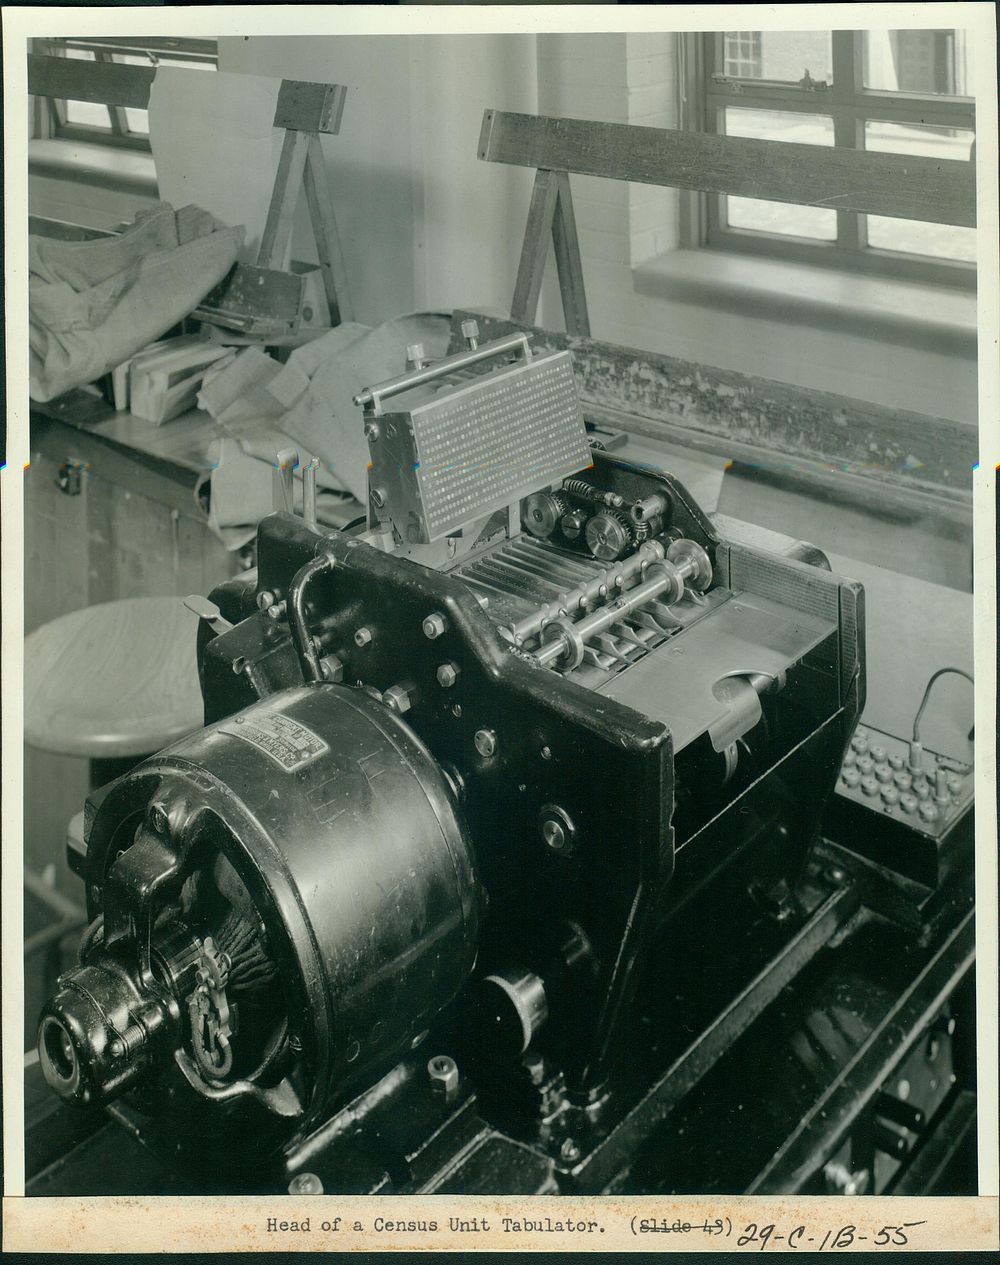 Head of a Census Unit Tabulator, 1940 - 1941. Original public domain image from Flickr